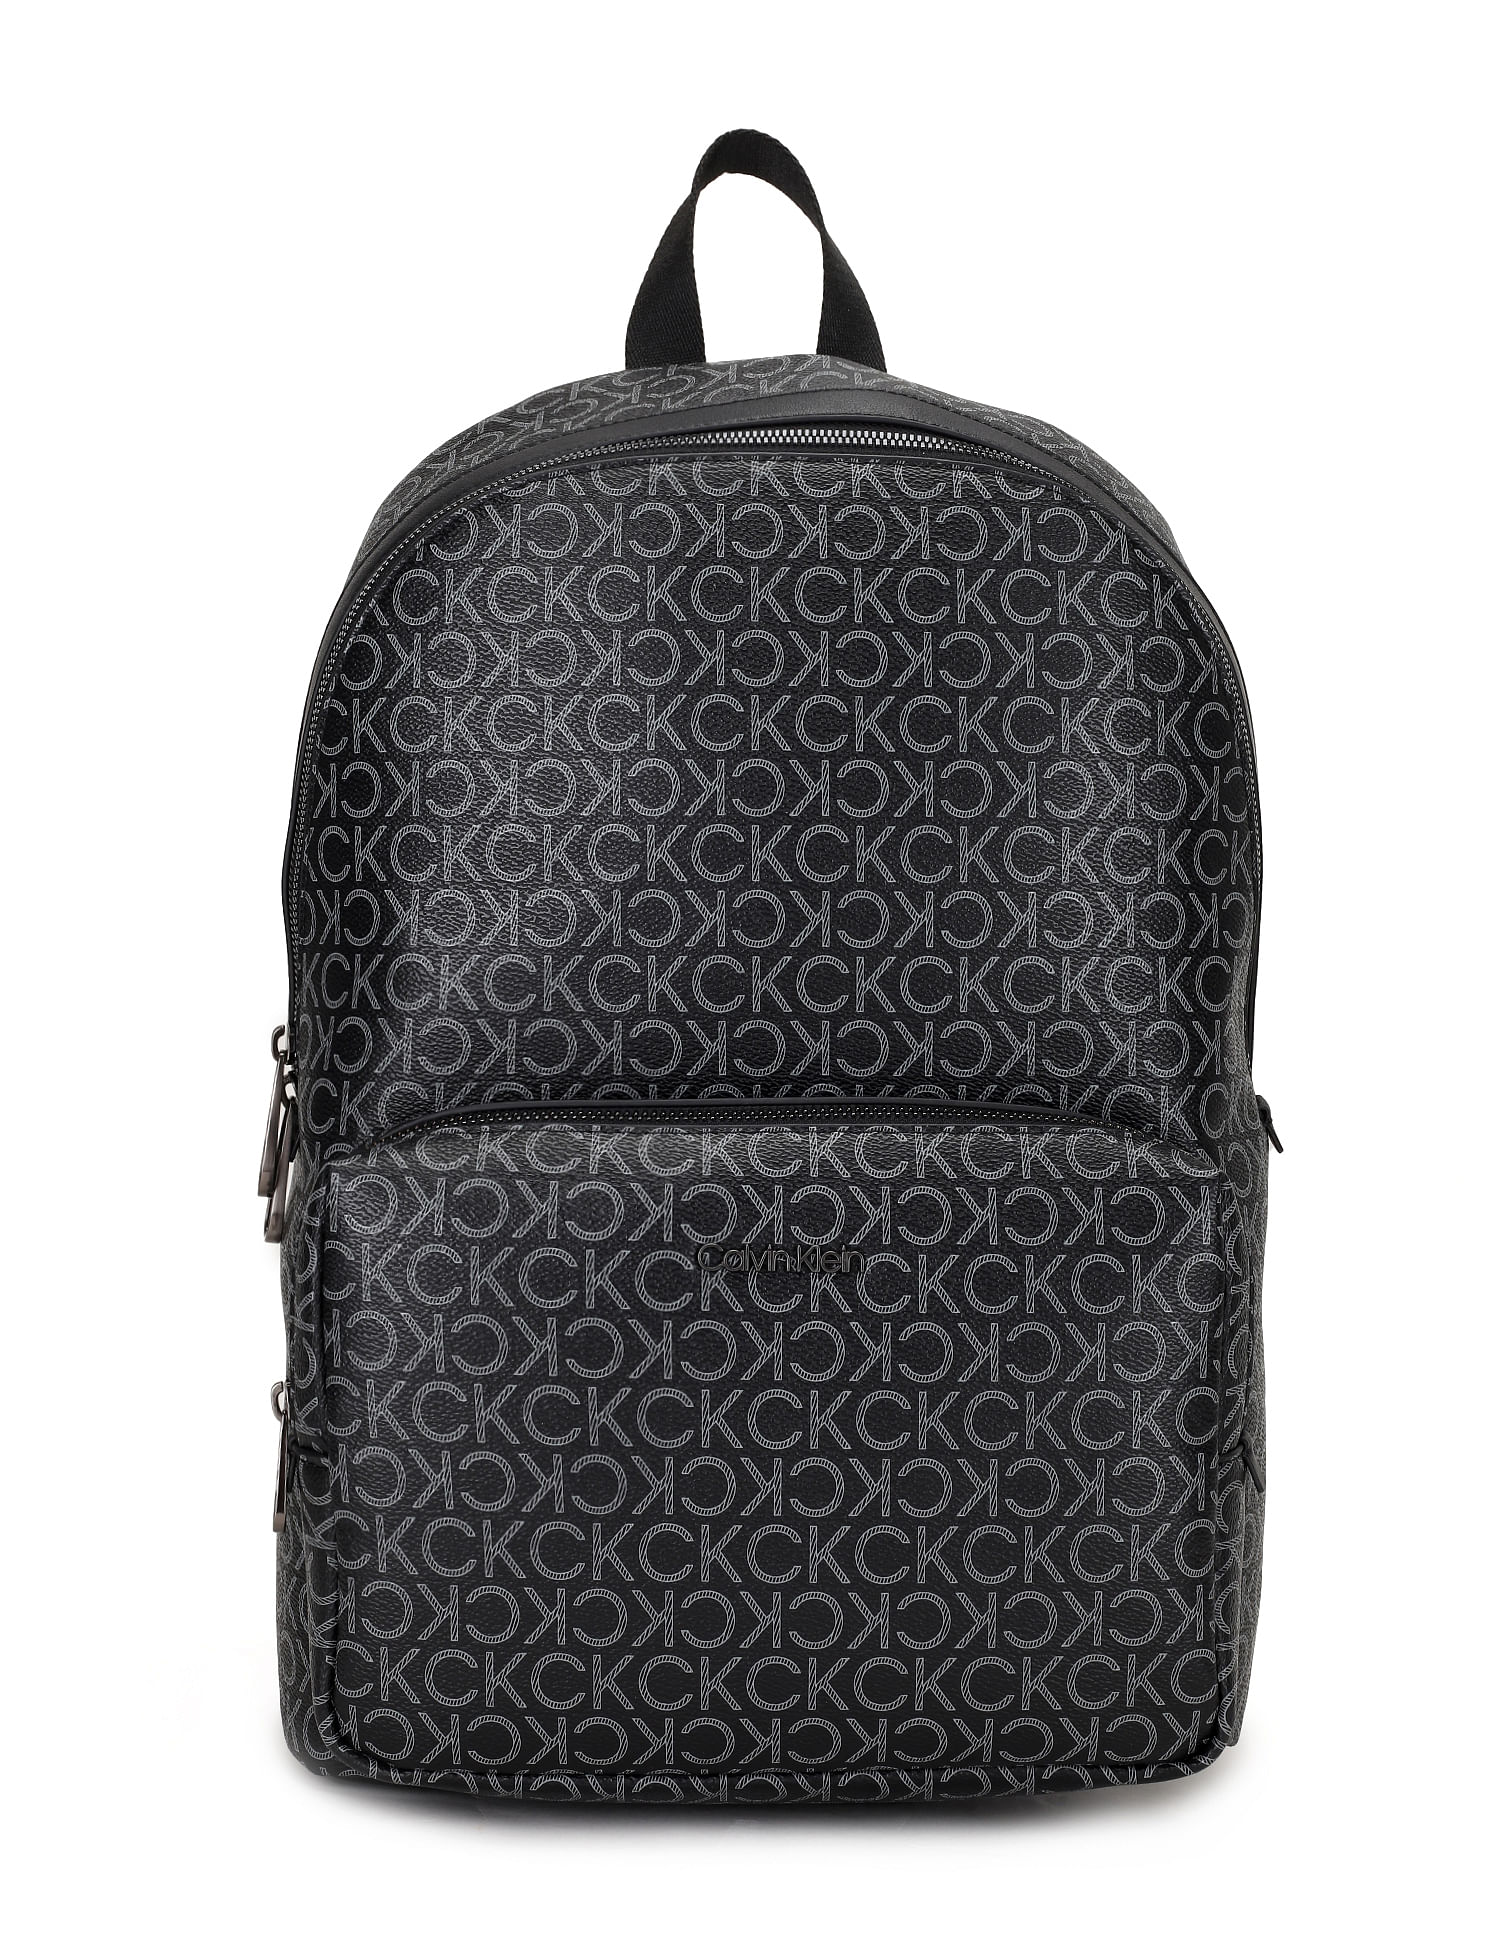 Calvin Klein Black Fashion Nylon Backpack Purse Flap Drawstring | eBay